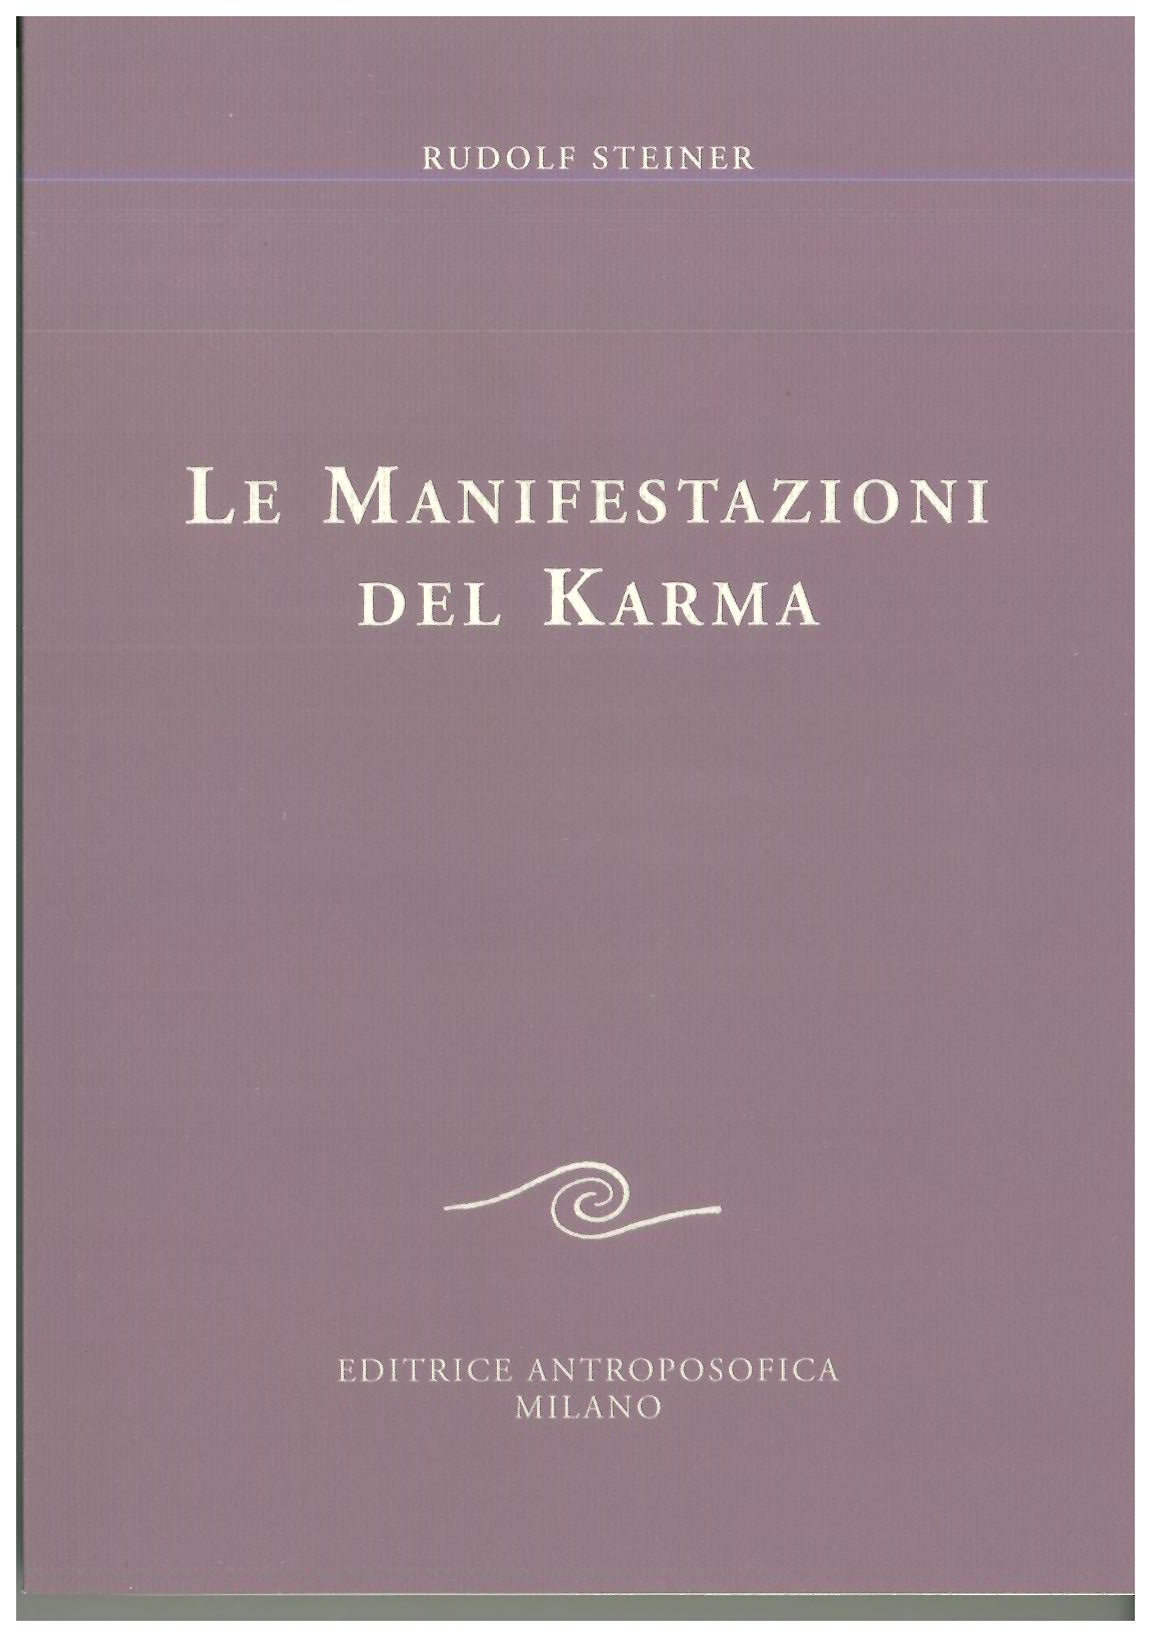 Le manifestazioni del karma - Rudolf Steiner